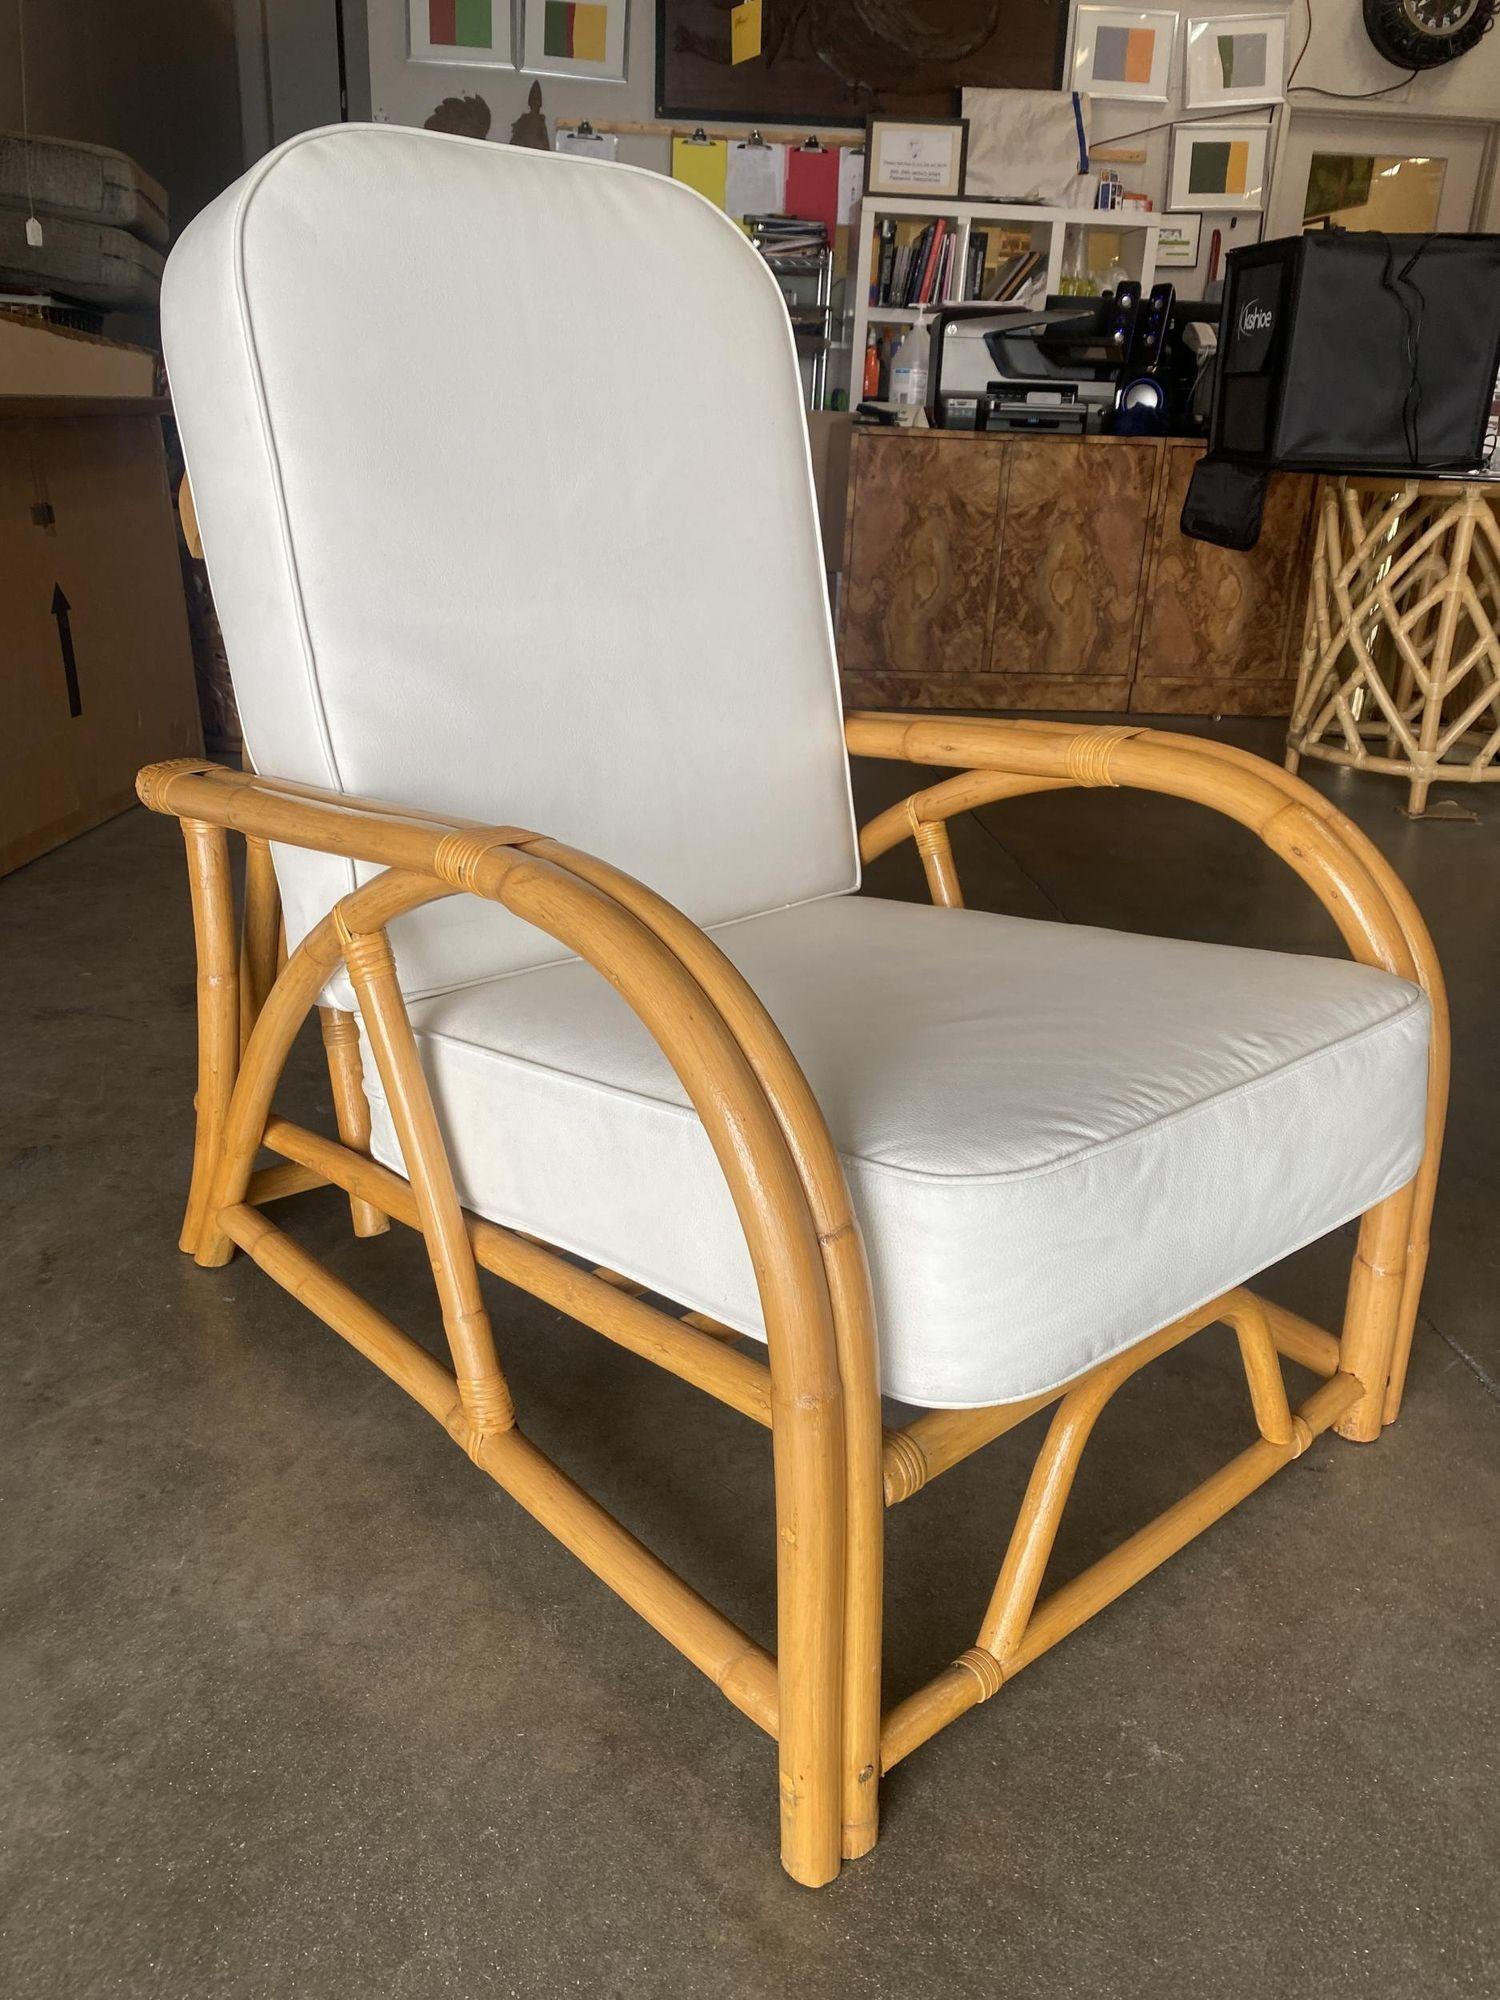 1940s recliner chair